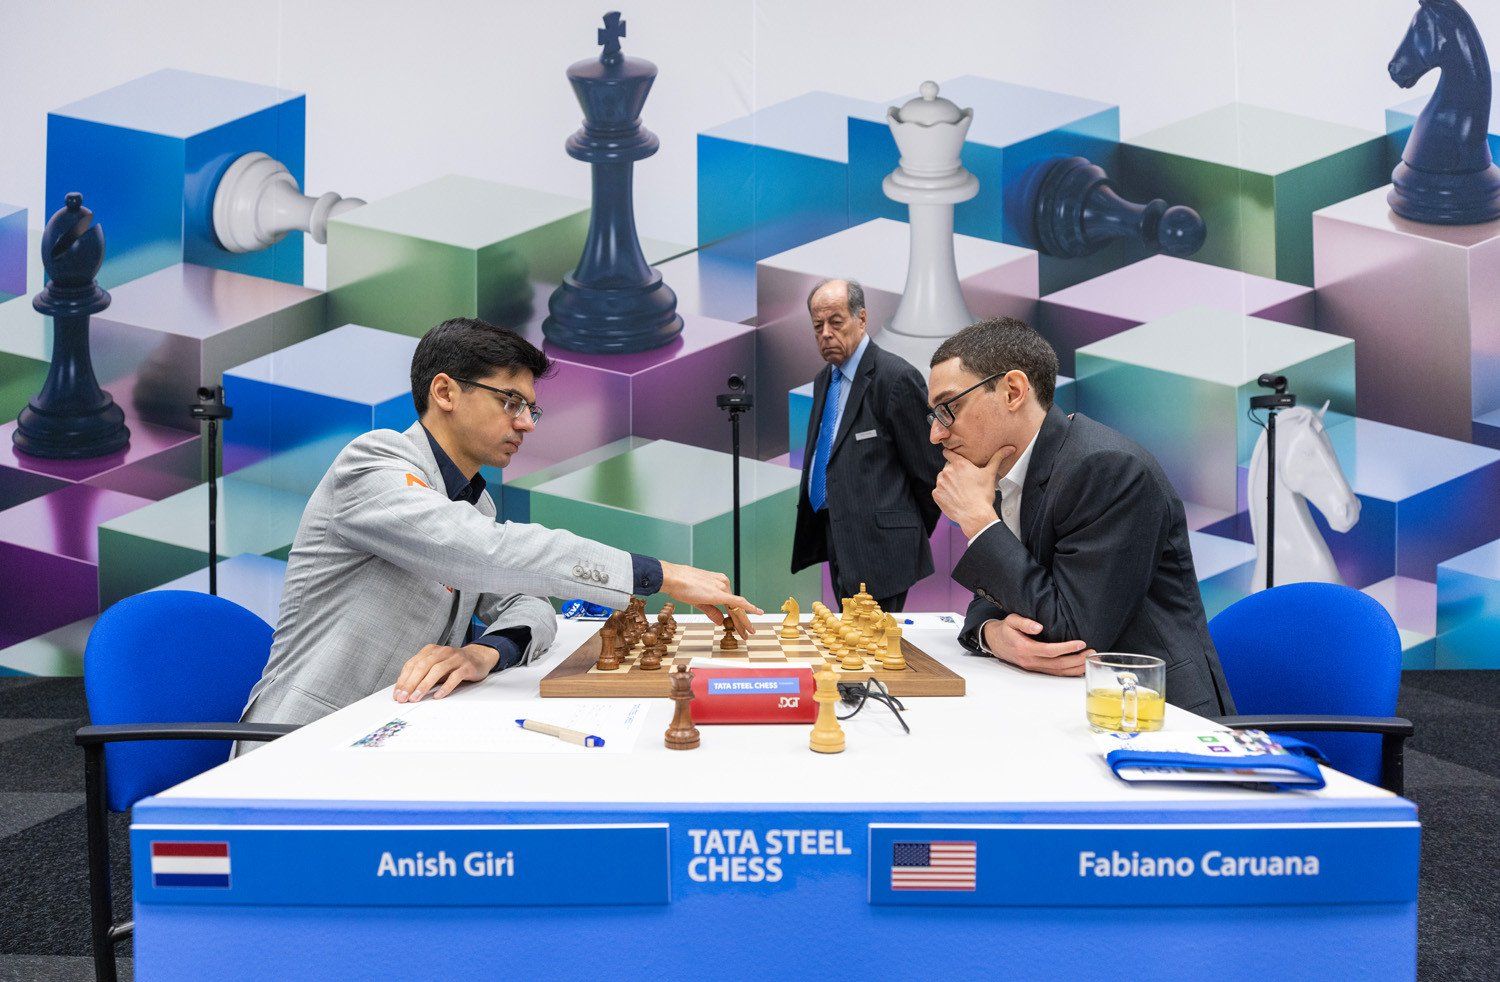 Tata Steel Chess - ♟, BREAKING